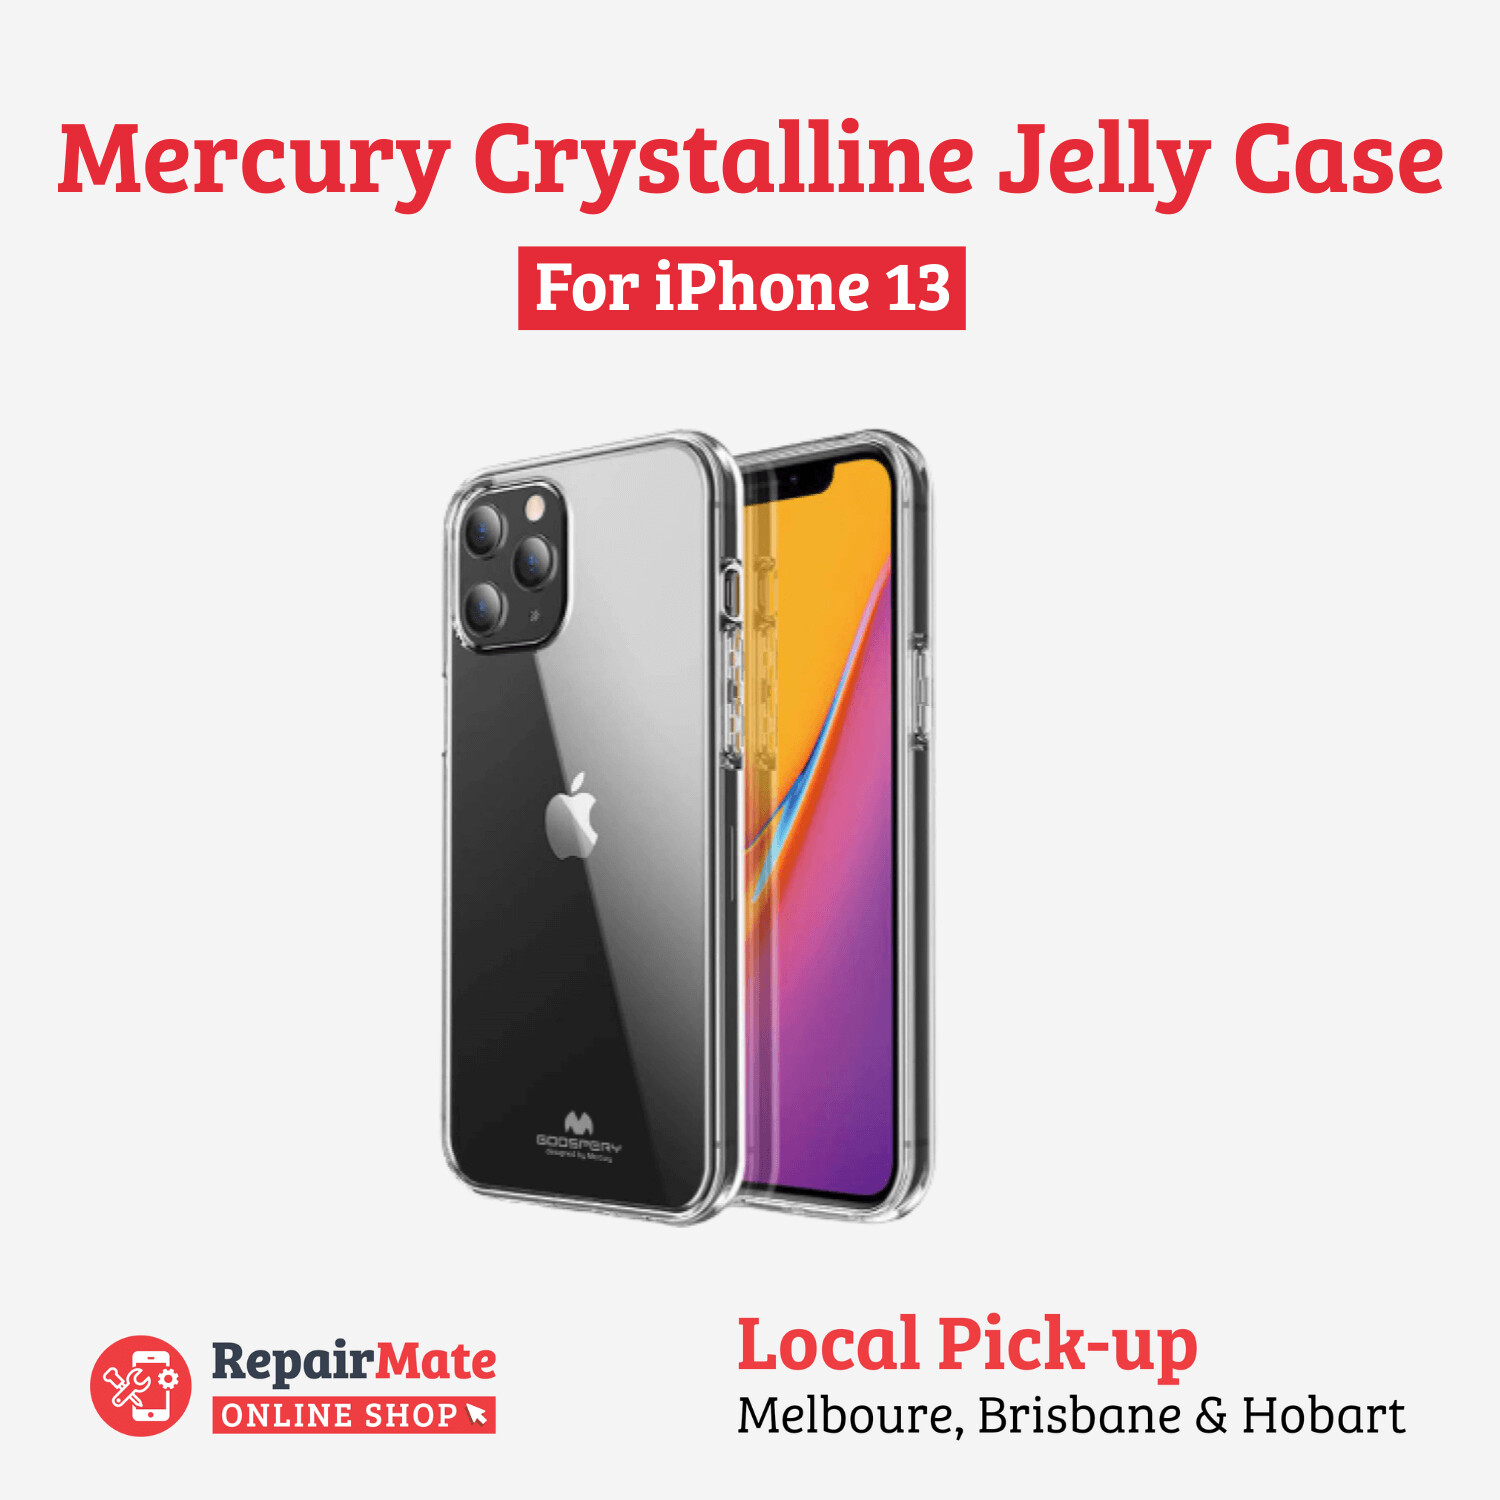 iPhone 13 Mercury Crystalline Jelly Case Cover